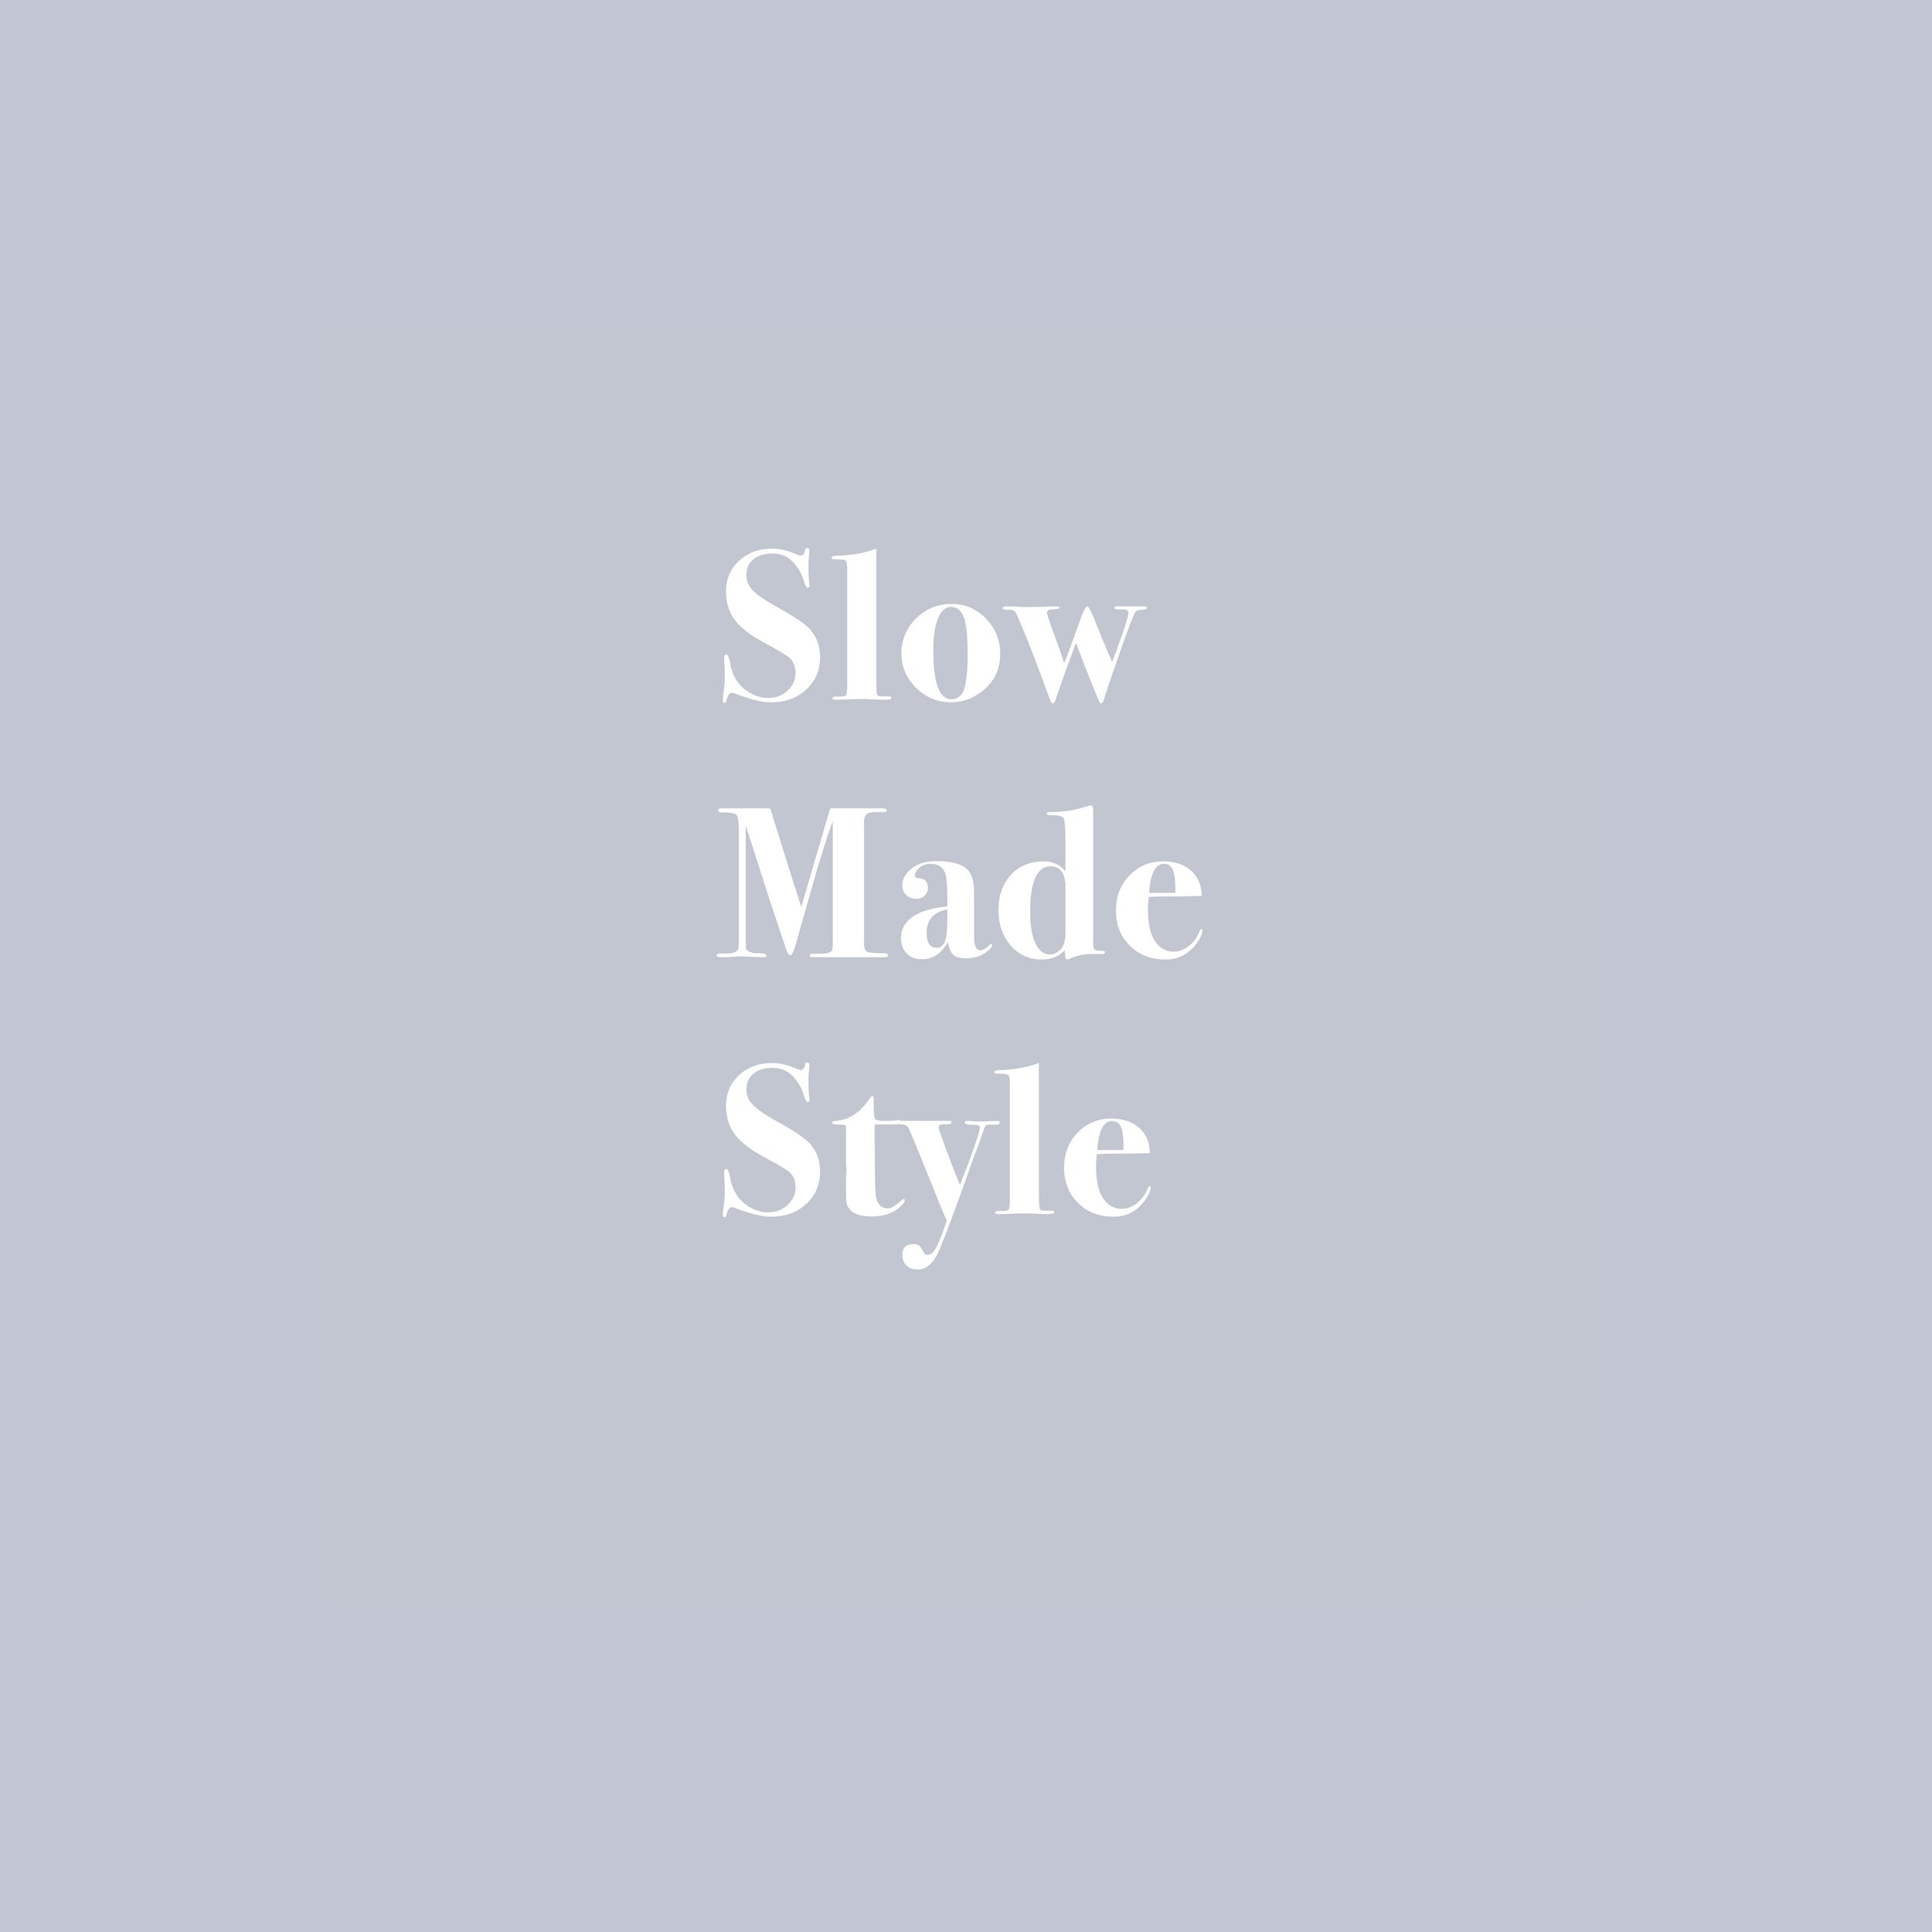 Slow Made Style Instagram Logo Final.jpg